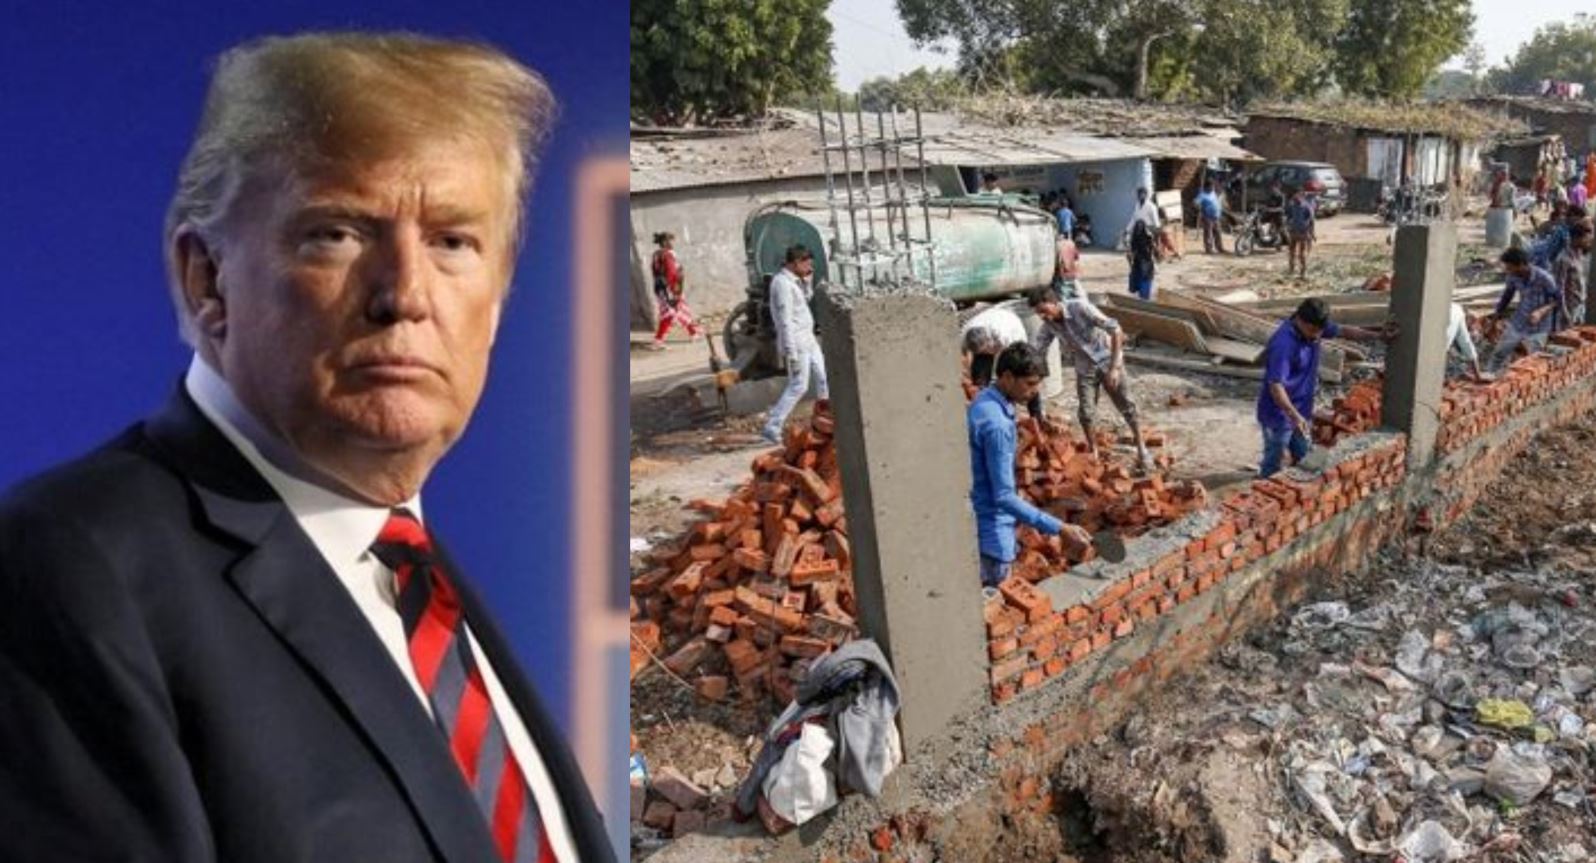 Walling Gujarat slums for Trumps 3-hr visit reflects slave mentality: Sena